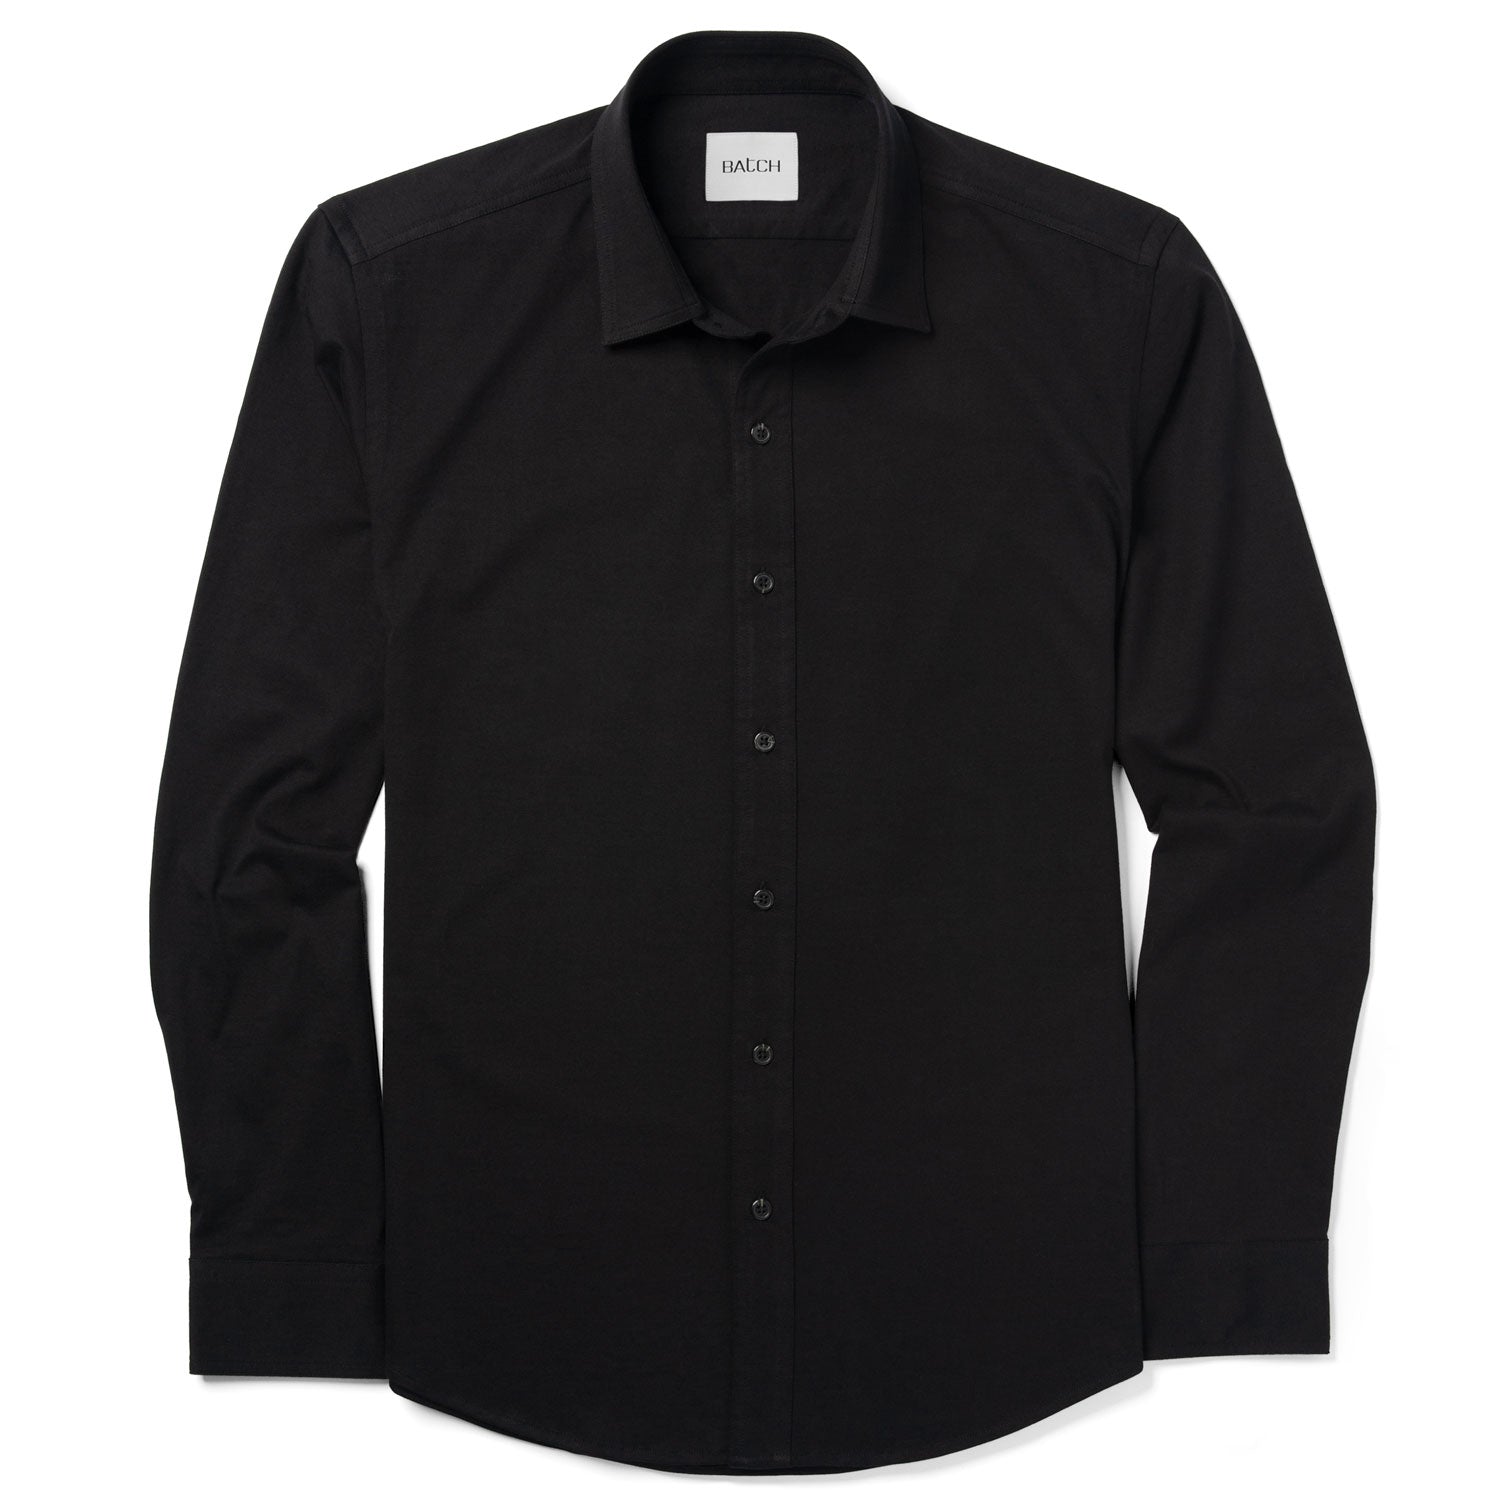 Essential T-Shirt Shirt - Jet Black Cotton Jersey